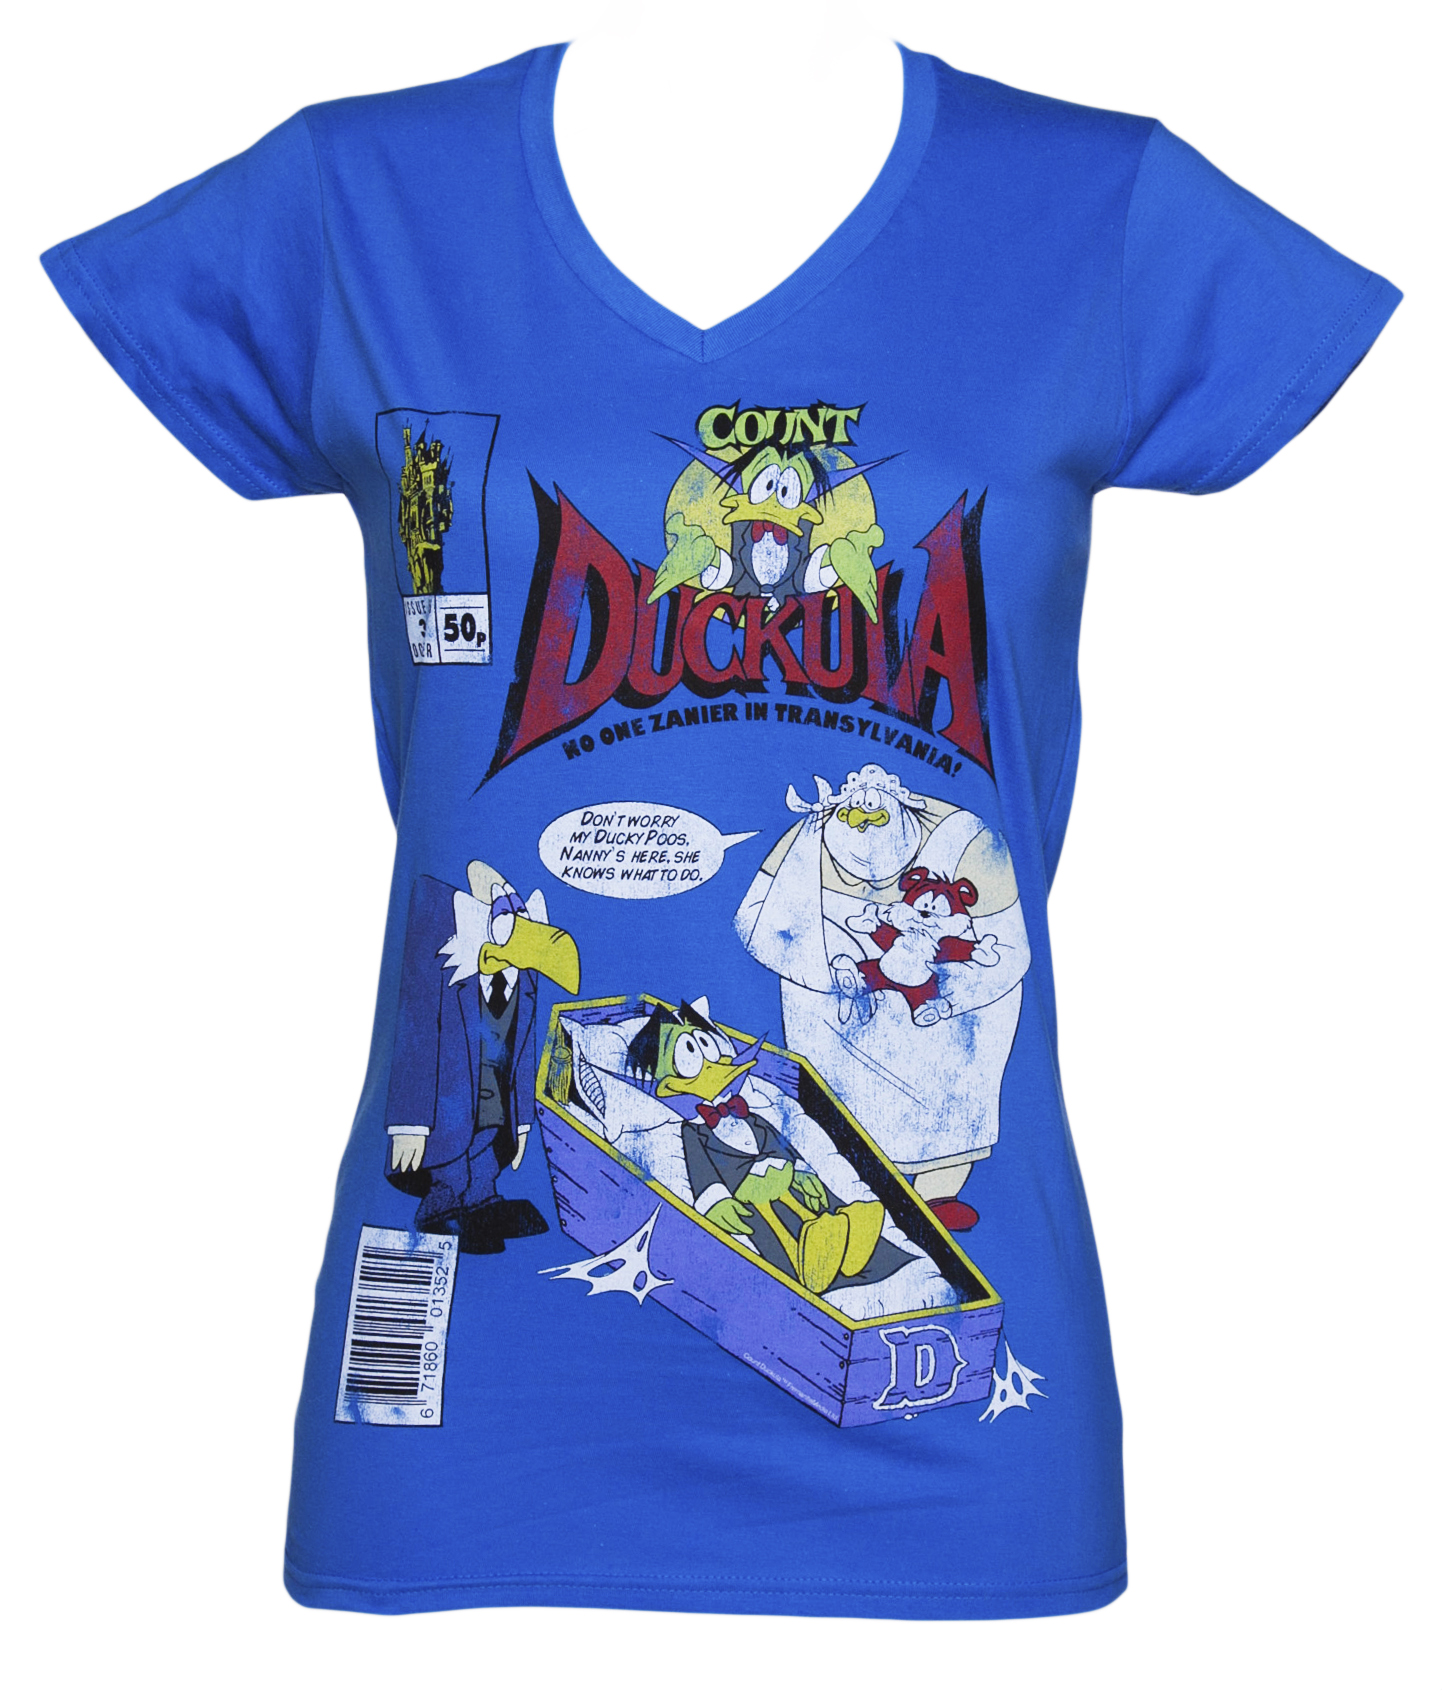 Ladies Count Duckula Comic Cover V-Neck T-Shirt